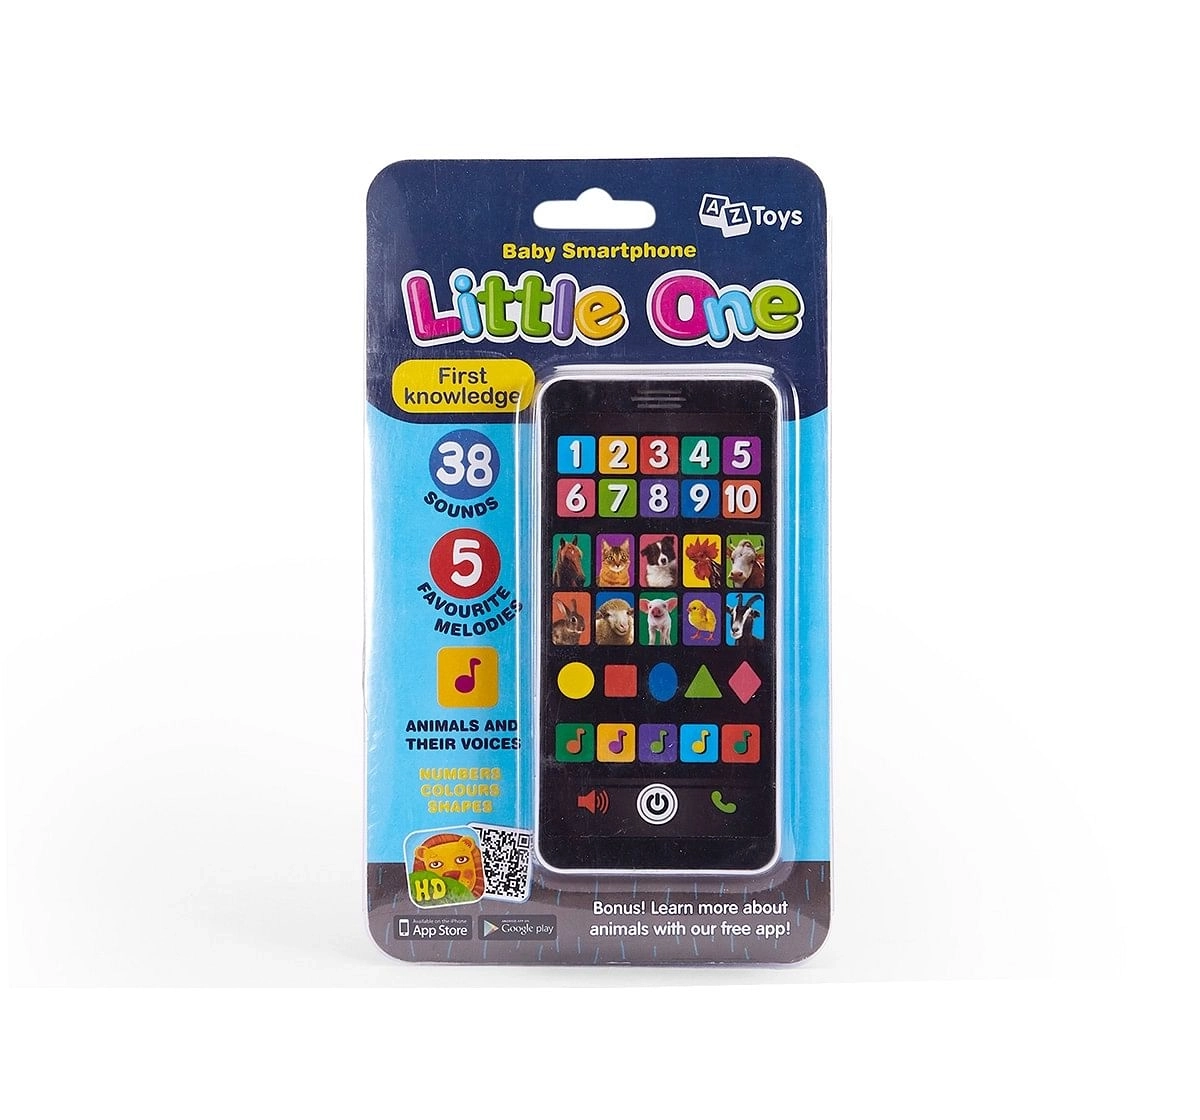 Comdaq AZ Baby Smartphone Learning Toy for Kids age 3Y+ (Black)